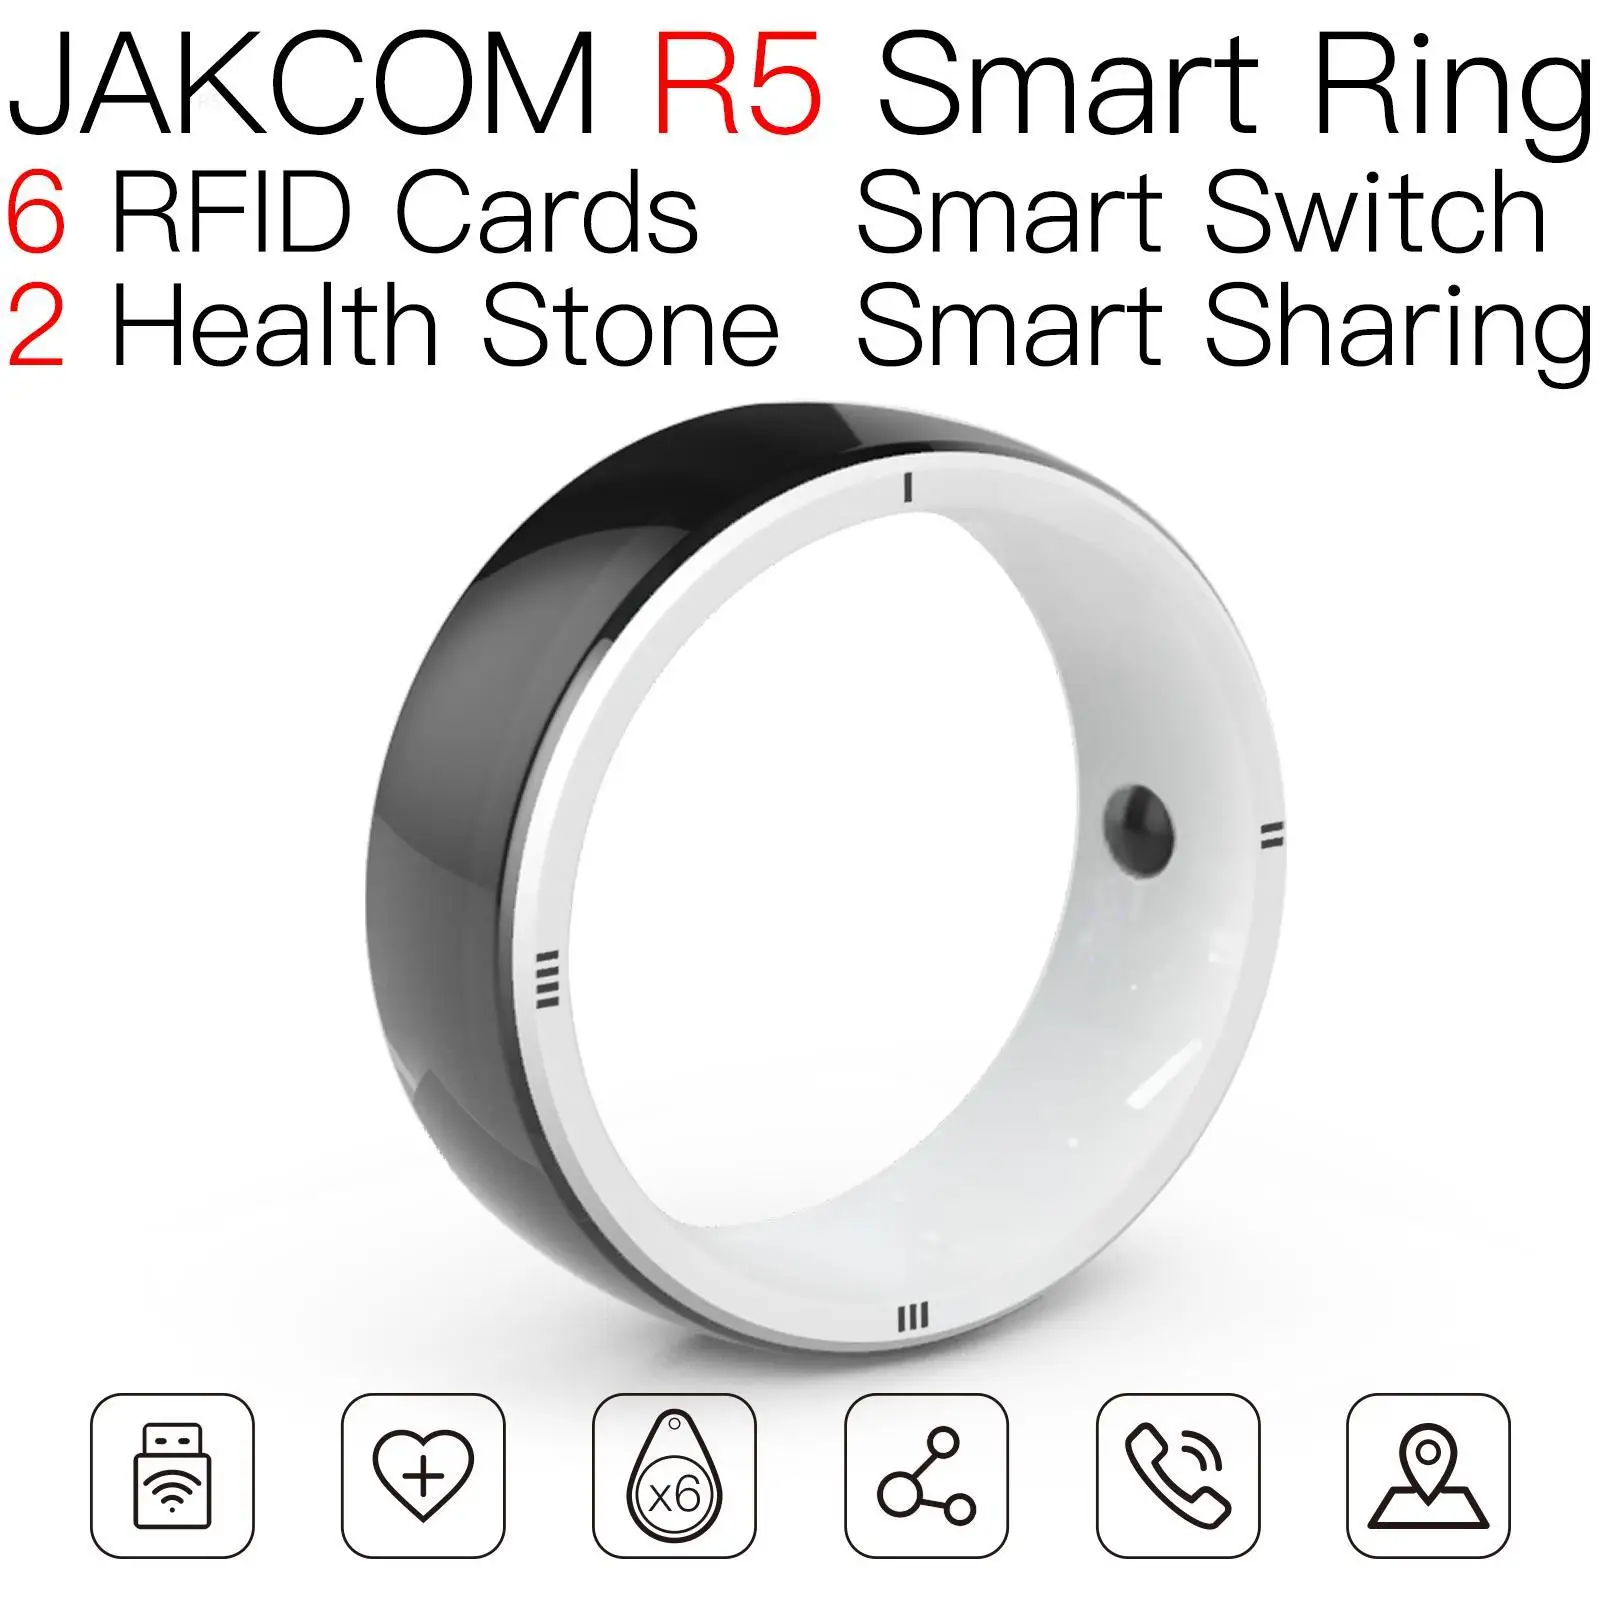 

JAKCOM R5 Smart Ring Super value than clone tag monaco 125 rfid rewritable chip contactless epc 6b variable ic tags g2 100pcs